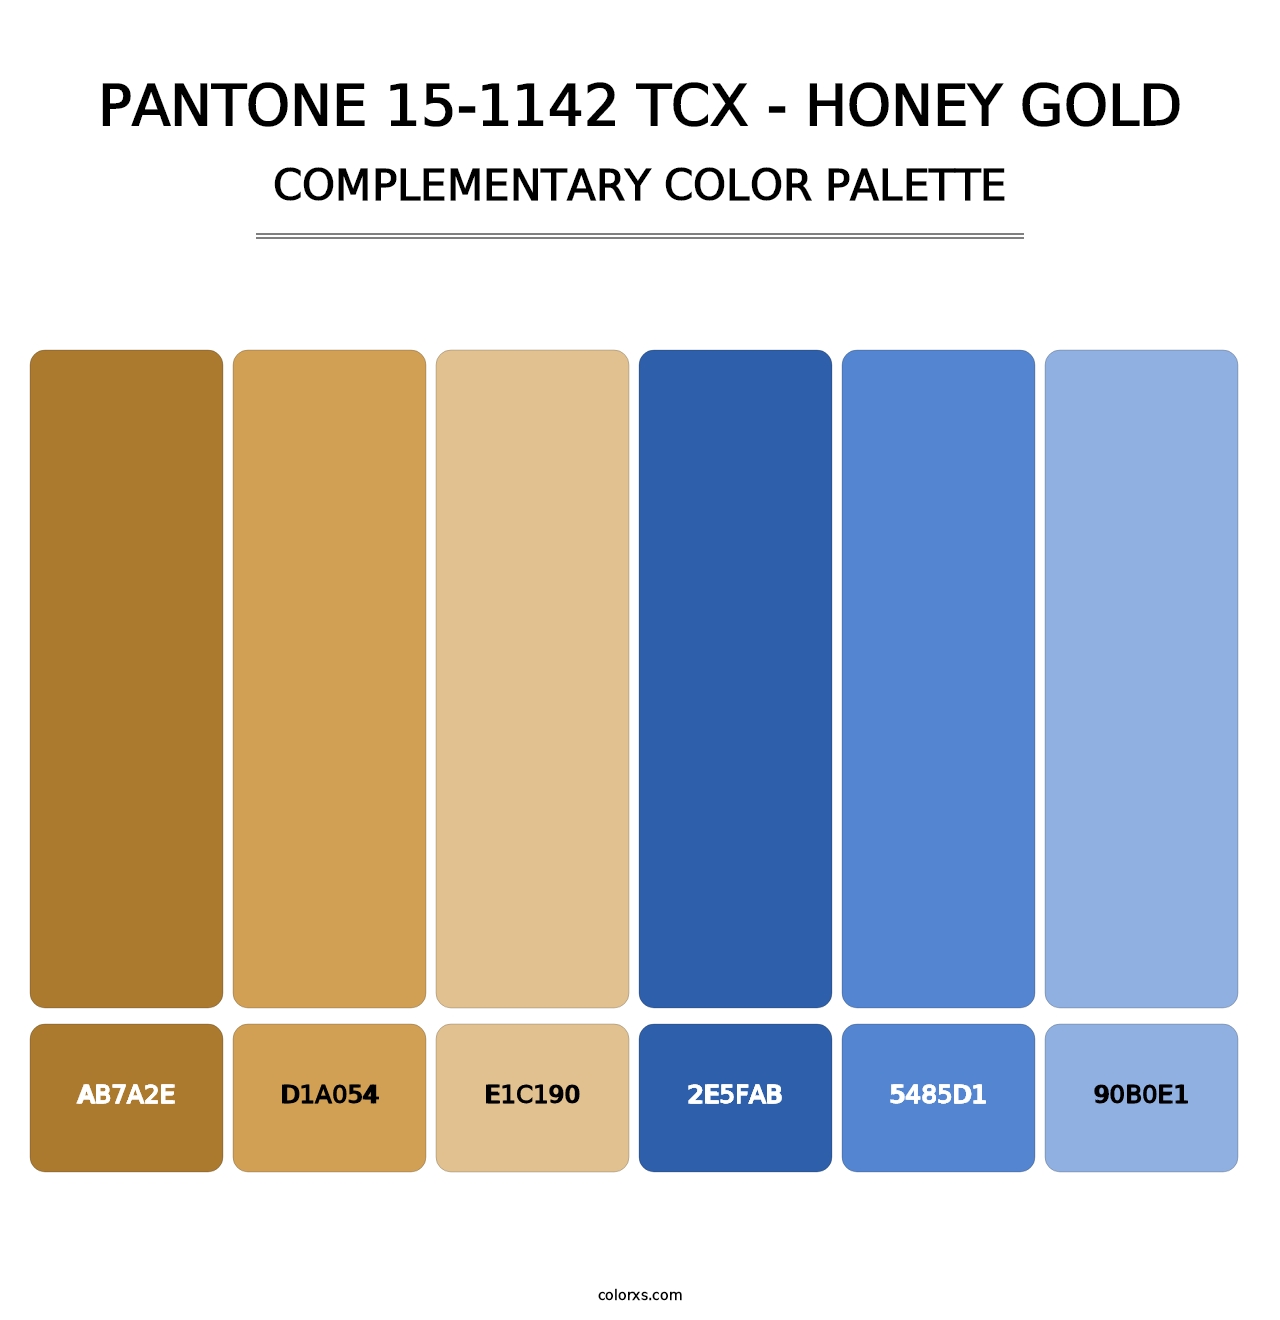 PANTONE 15-1142 TCX - Honey Gold - Complementary Color Palette